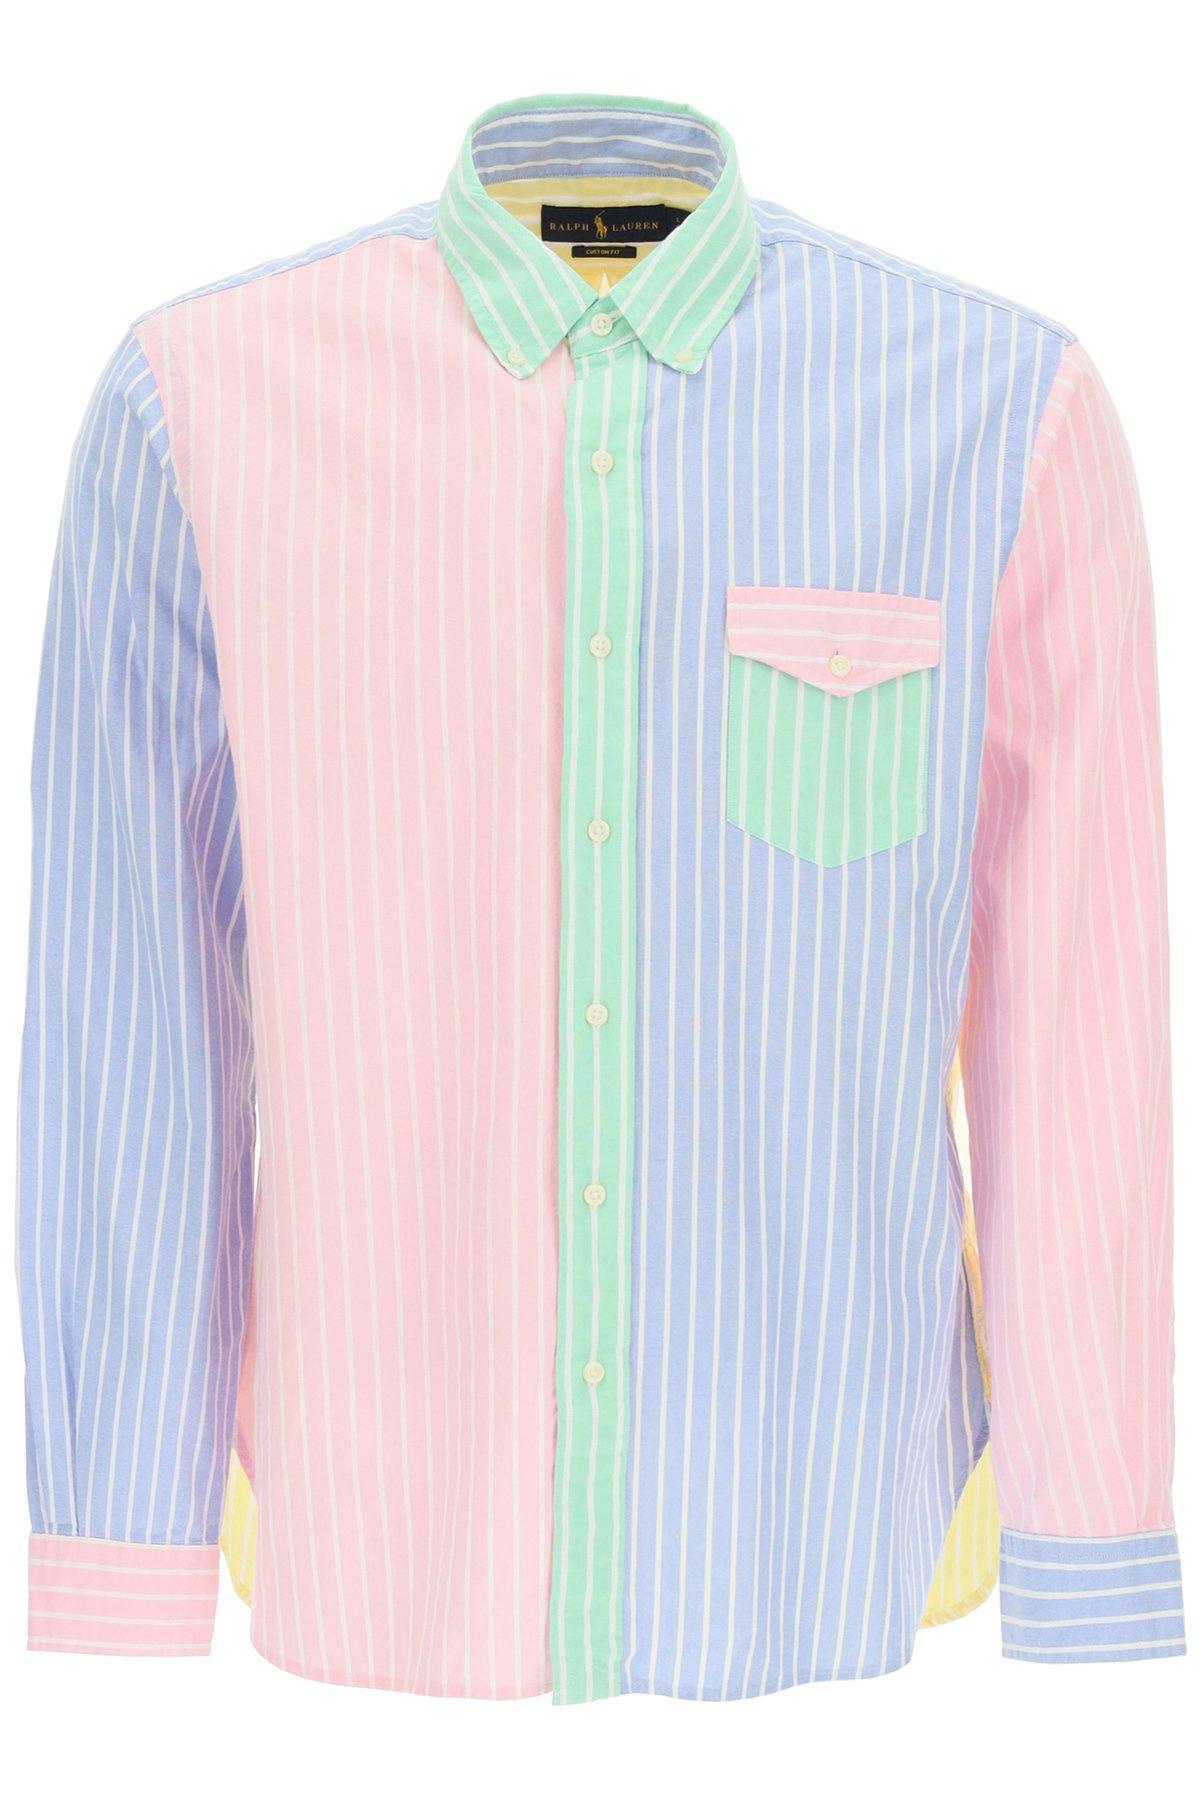 Polo Ralph Lauren Multicolor Striped Oxford Shirt S Cotton for Men | Lyst